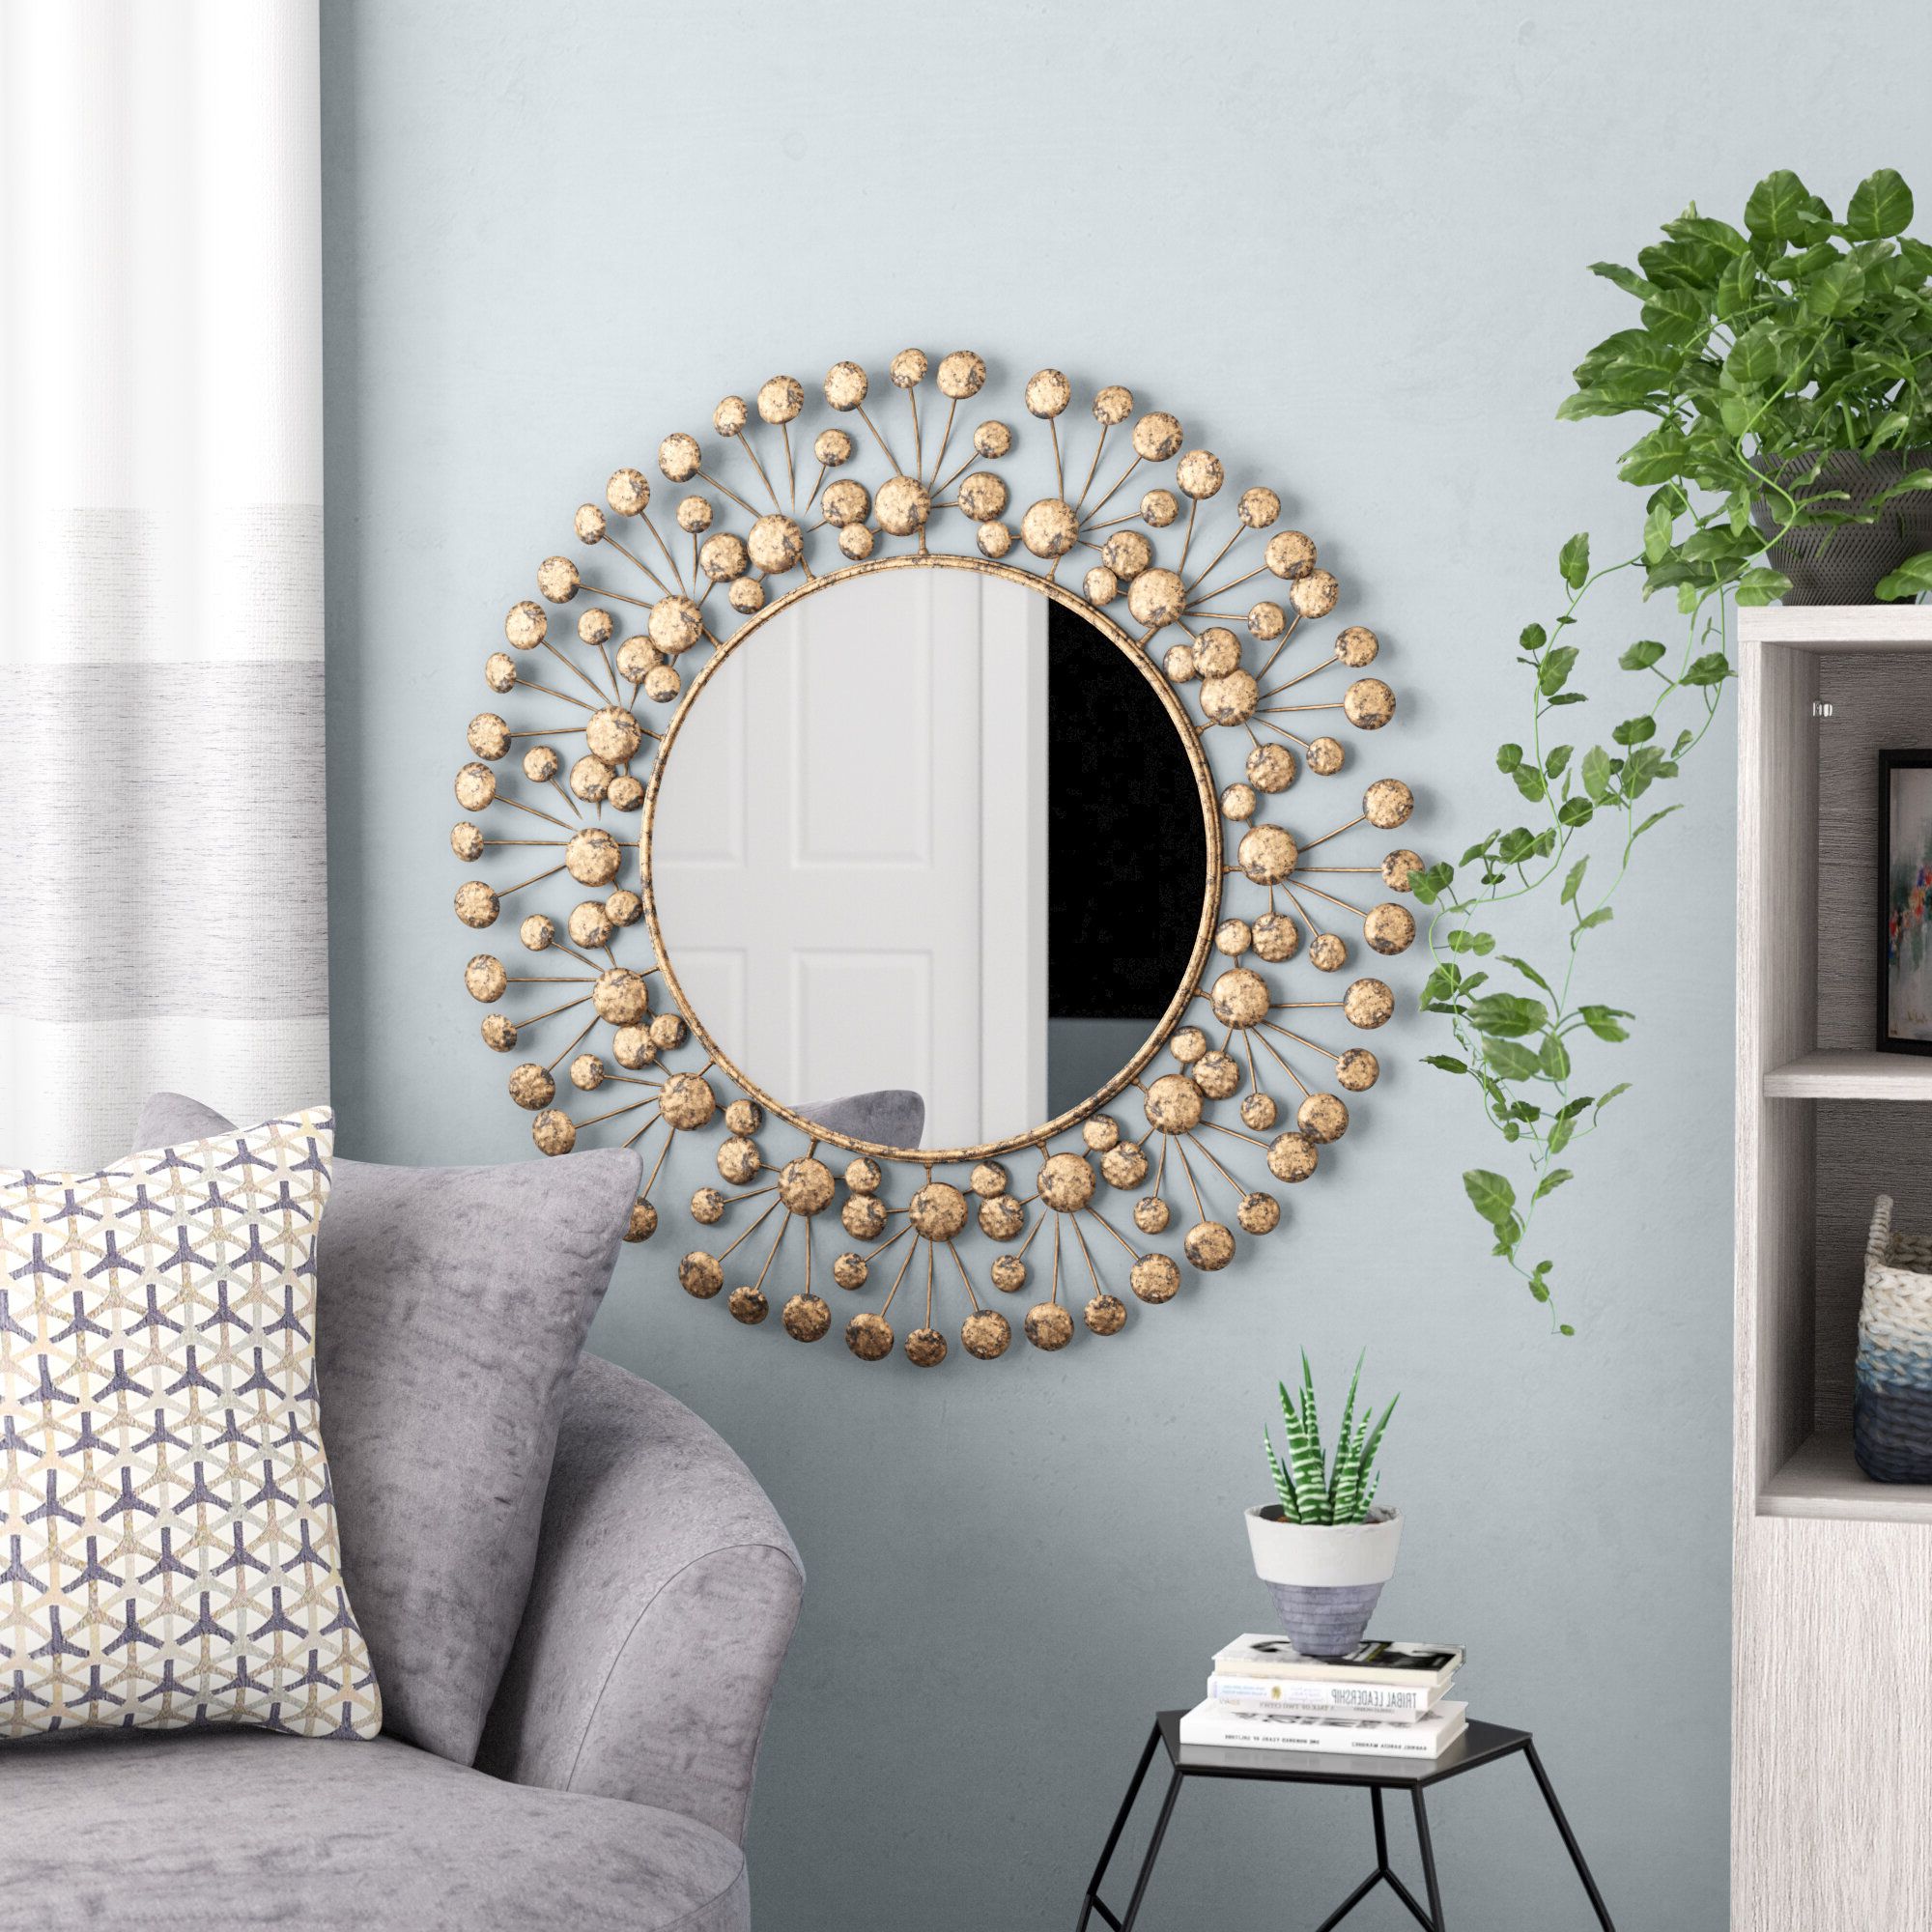 Eisenbarth Oversized Decorative Round Wall Mirror In Recent Round Decorative Wall Mirrors (View 4 of 20)